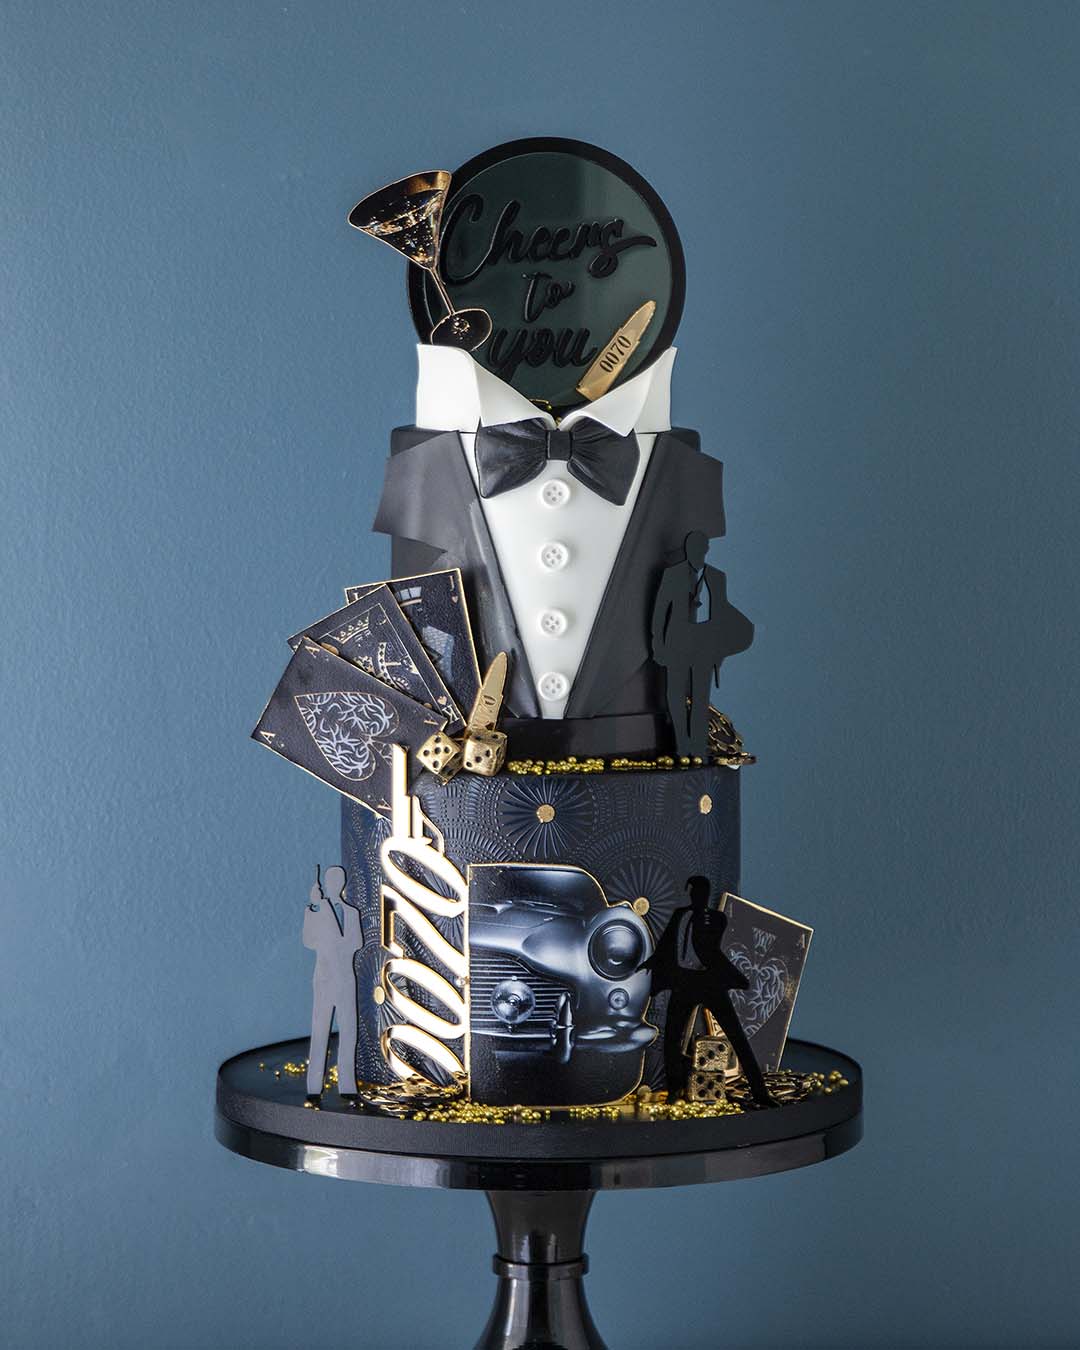 Versace  Chocolate wedding cake, Chanel cake, Elegant birthday cakes